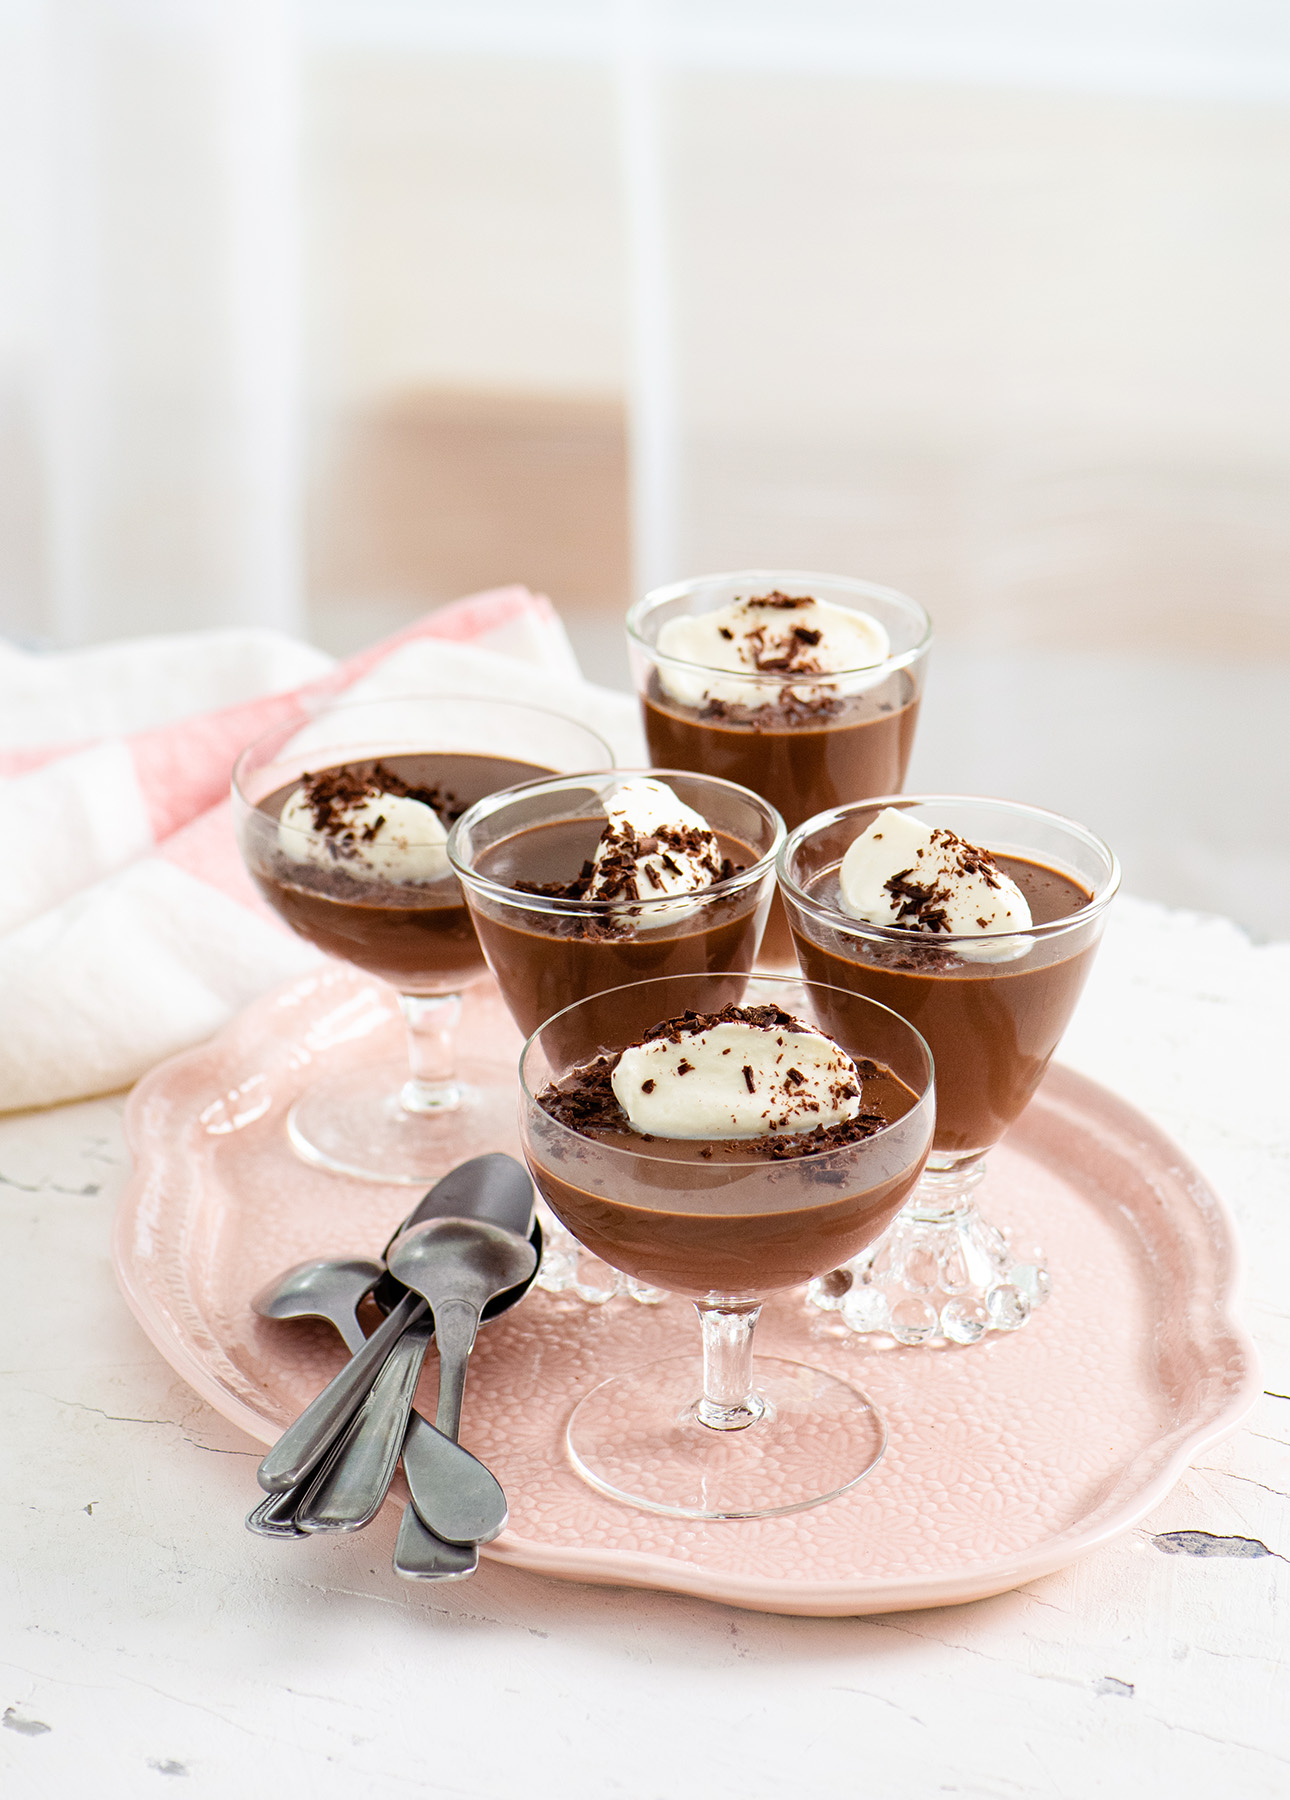 Dark Chocolate Pots de Crème, an Elegant but Easy French Dessert // FoodNouveau.com